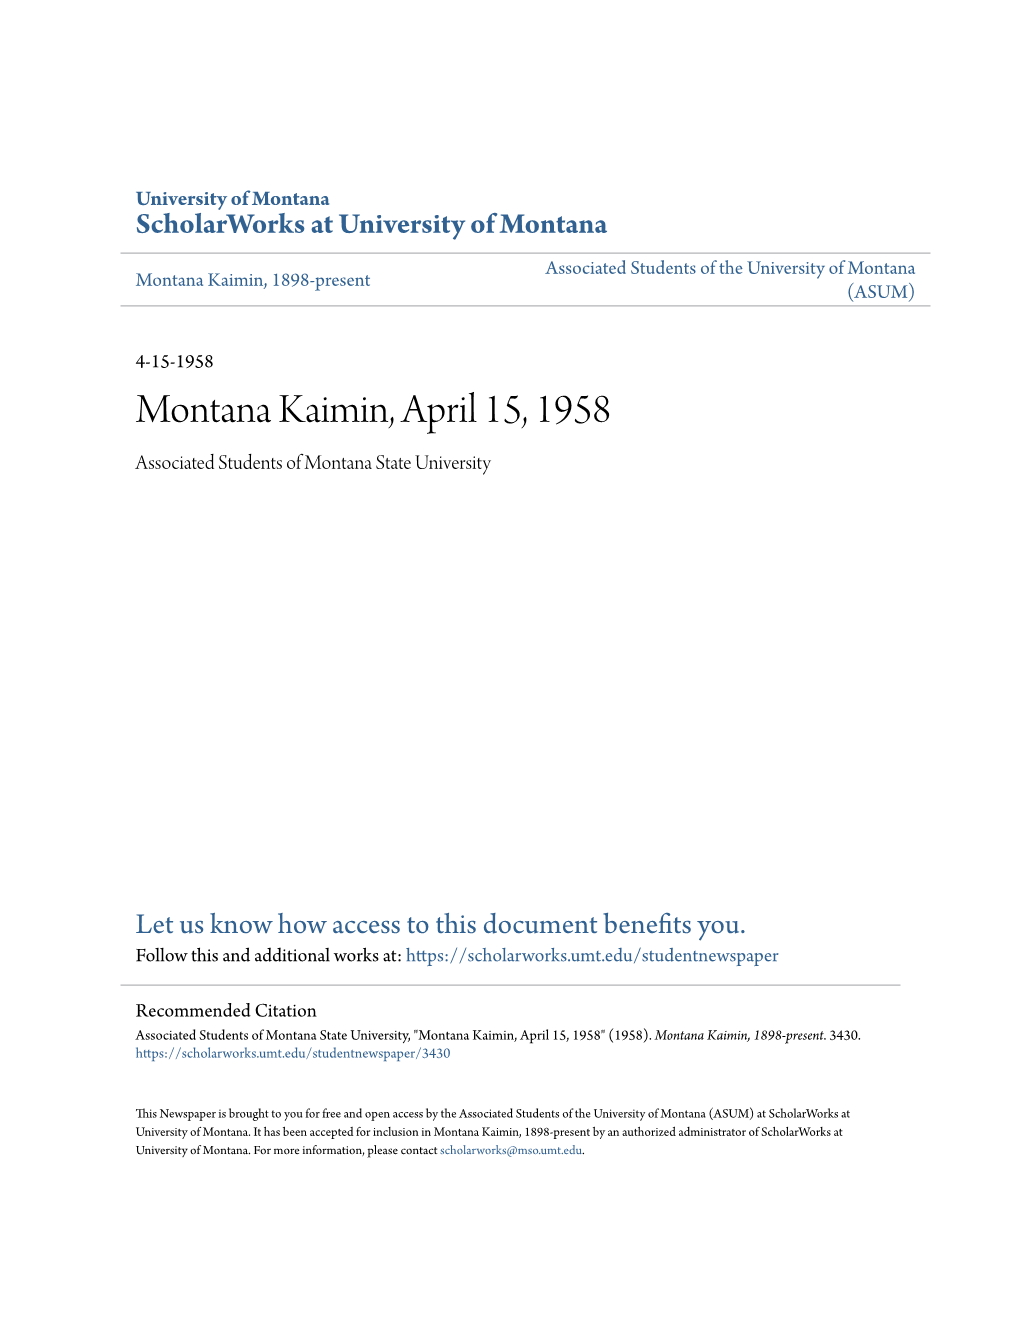 Montana Kaimin, April 15, 1958 Associated Students of Montana State University